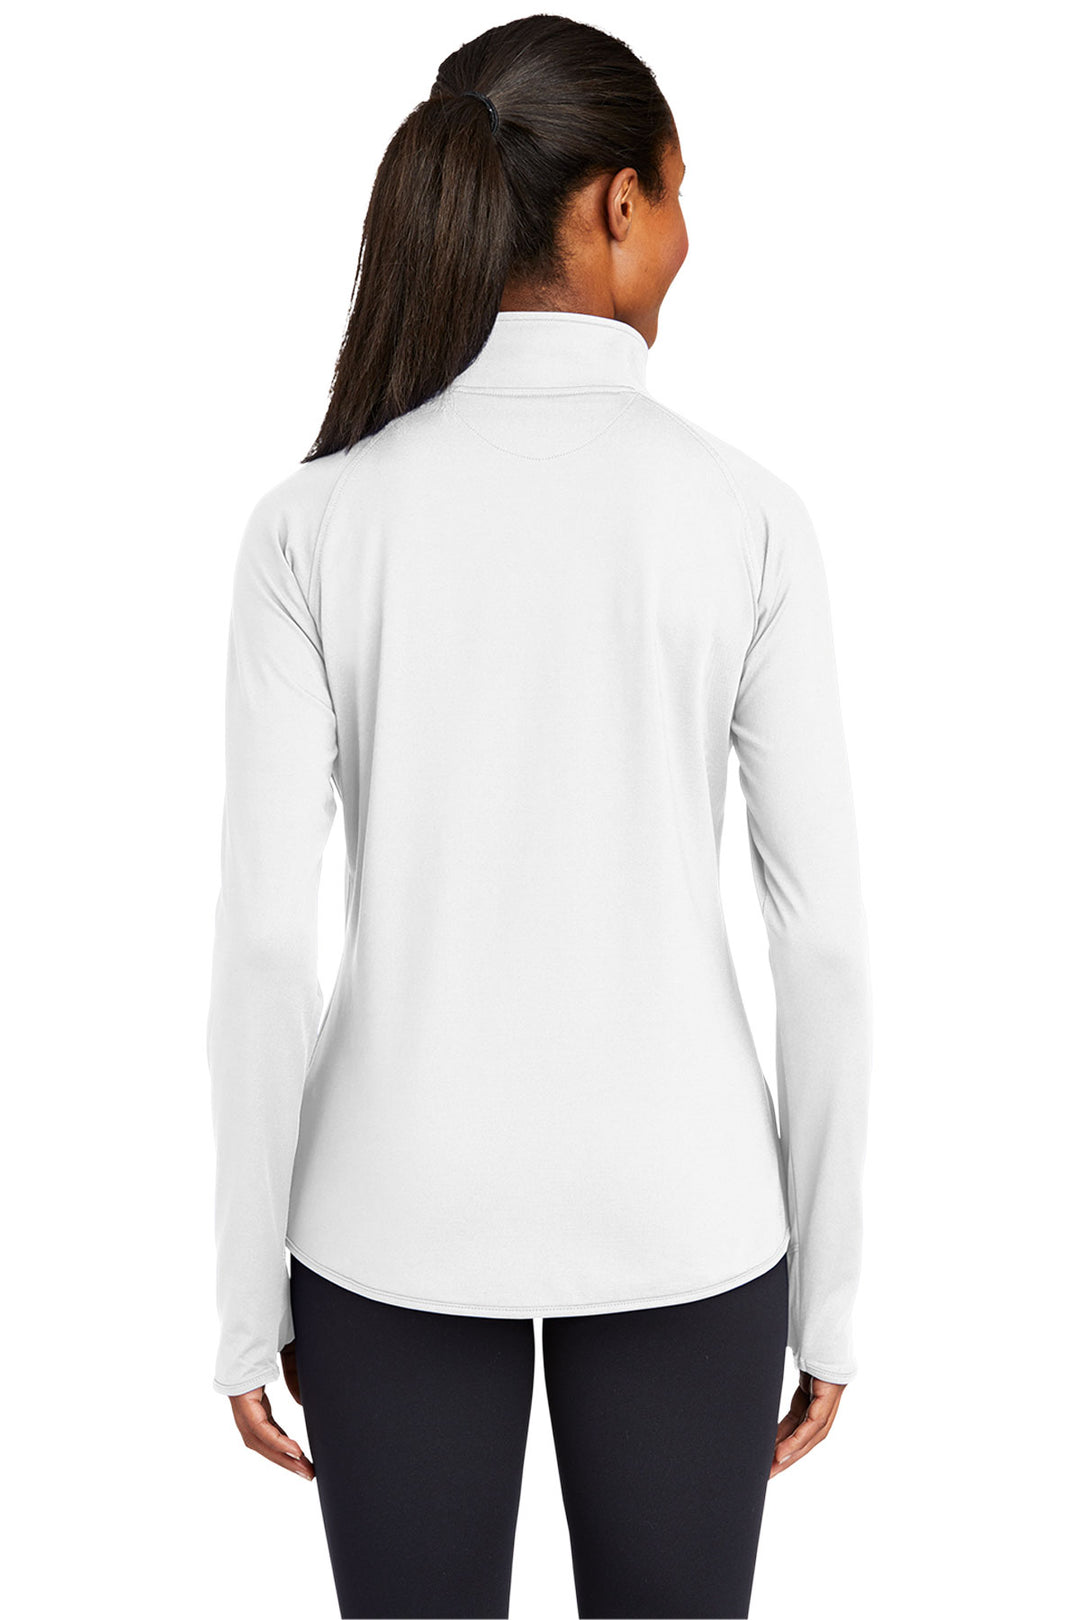 Ladies Sport-Wick Stretch 1/4-Zip Pullover